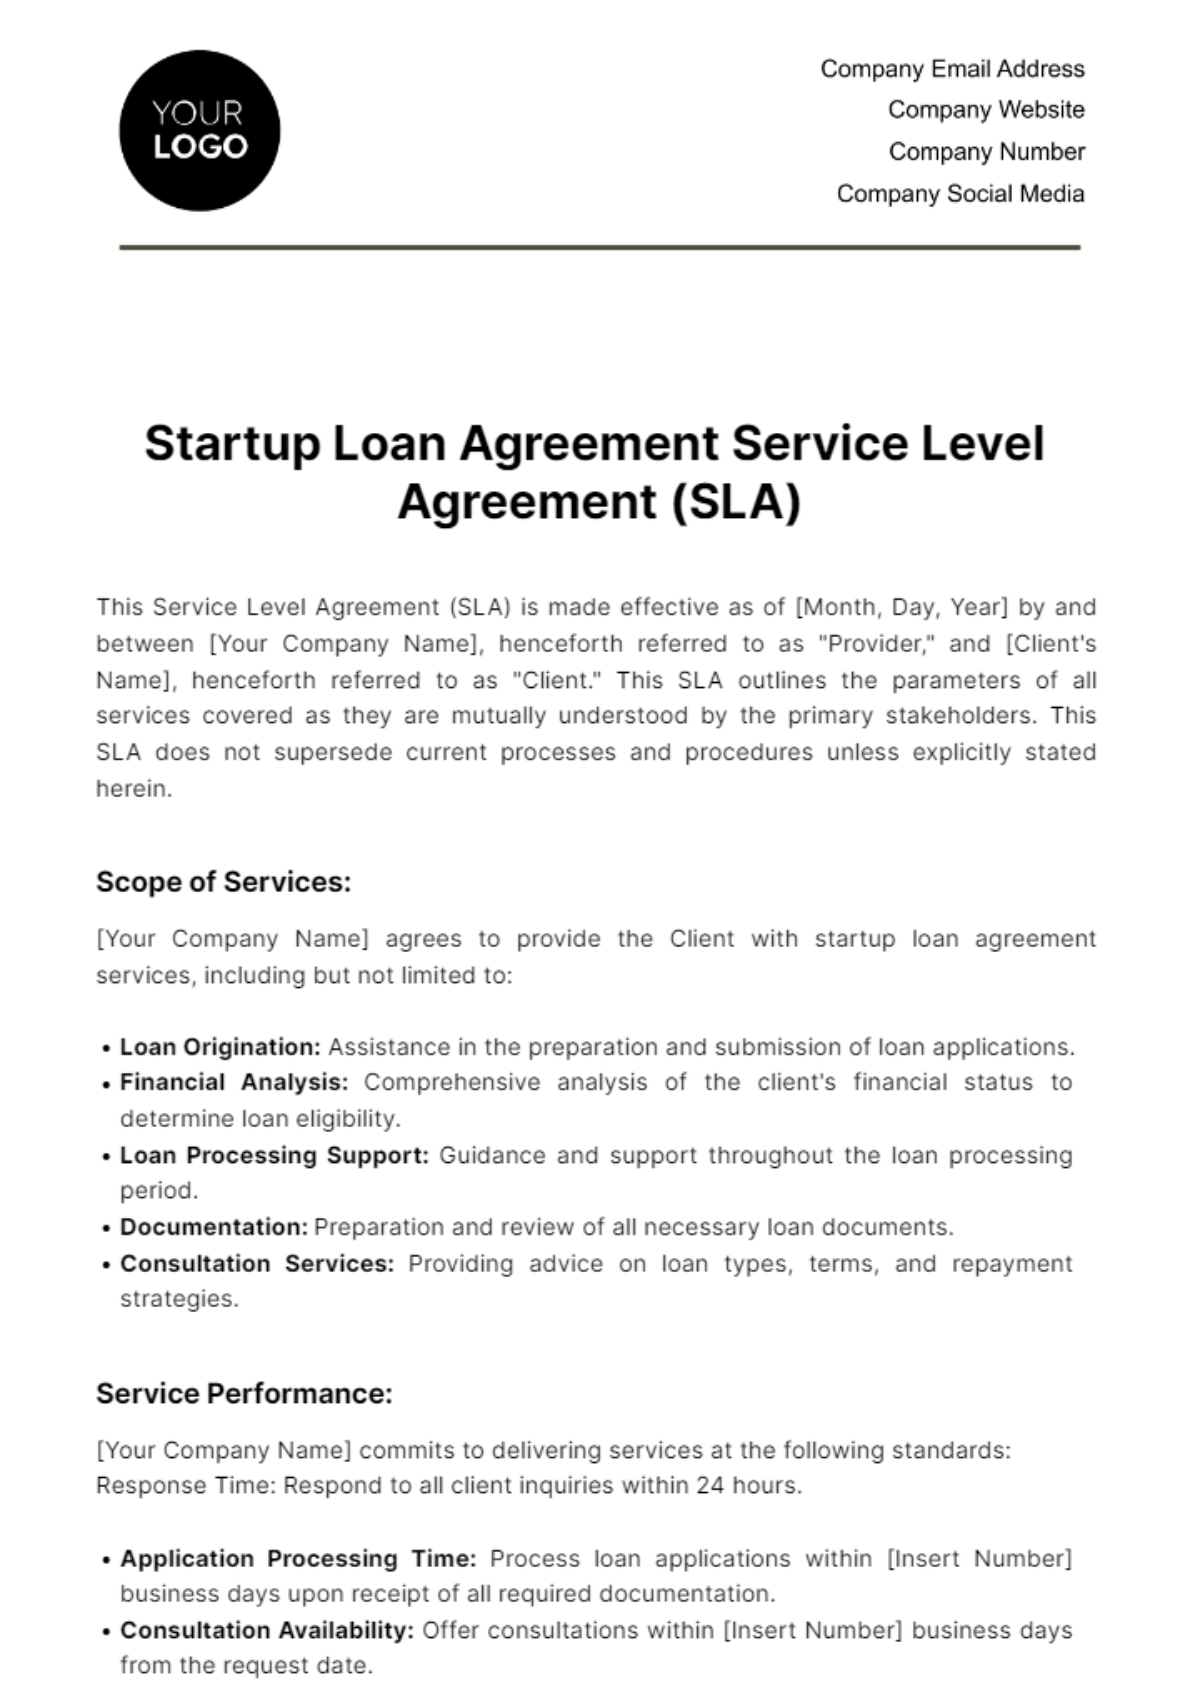 Free Startup Loan Agreement Service Level Agreement (SLA) Template